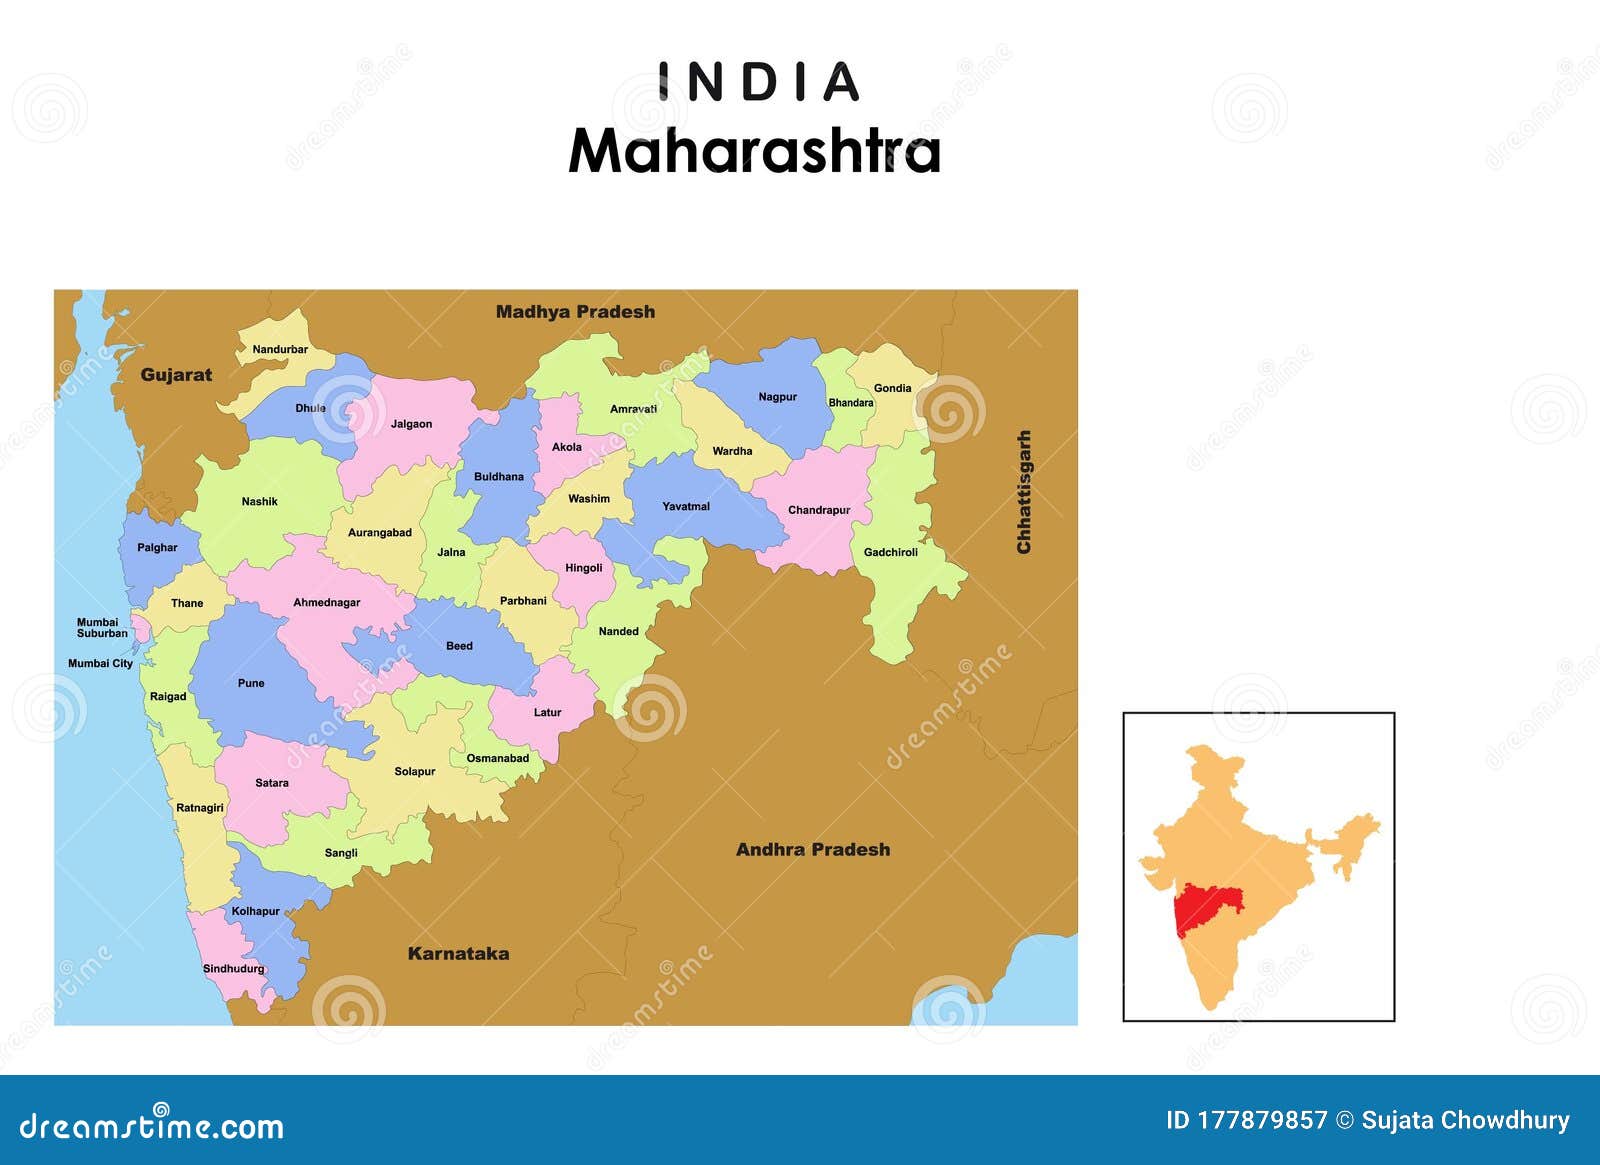 maharashtra map. district names in maharashtra. maharashtra map with border. maharashtra location in india map